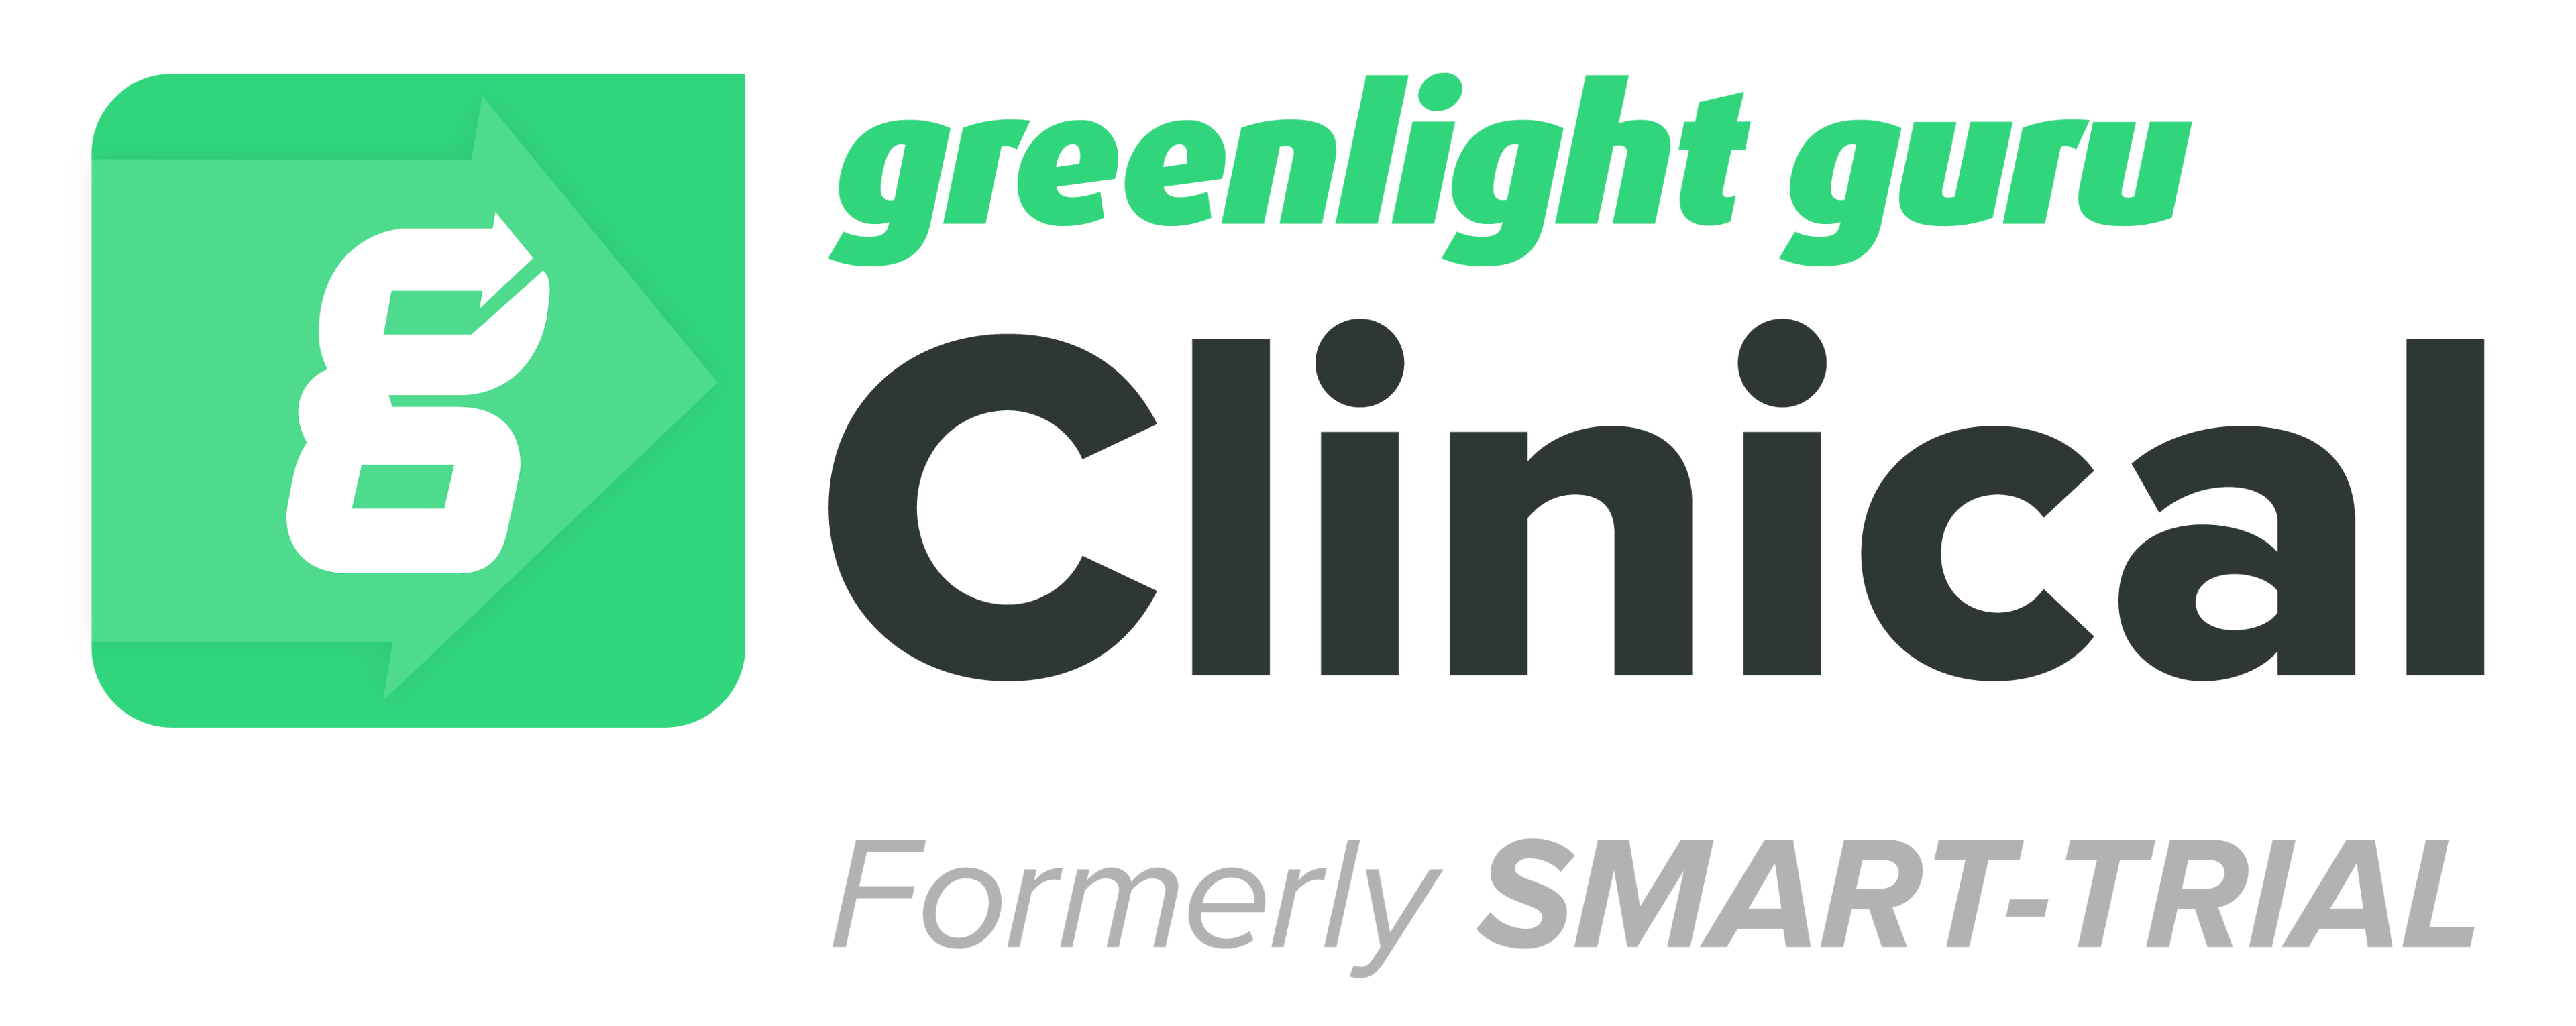 Greenlight Guru Clinical Logo